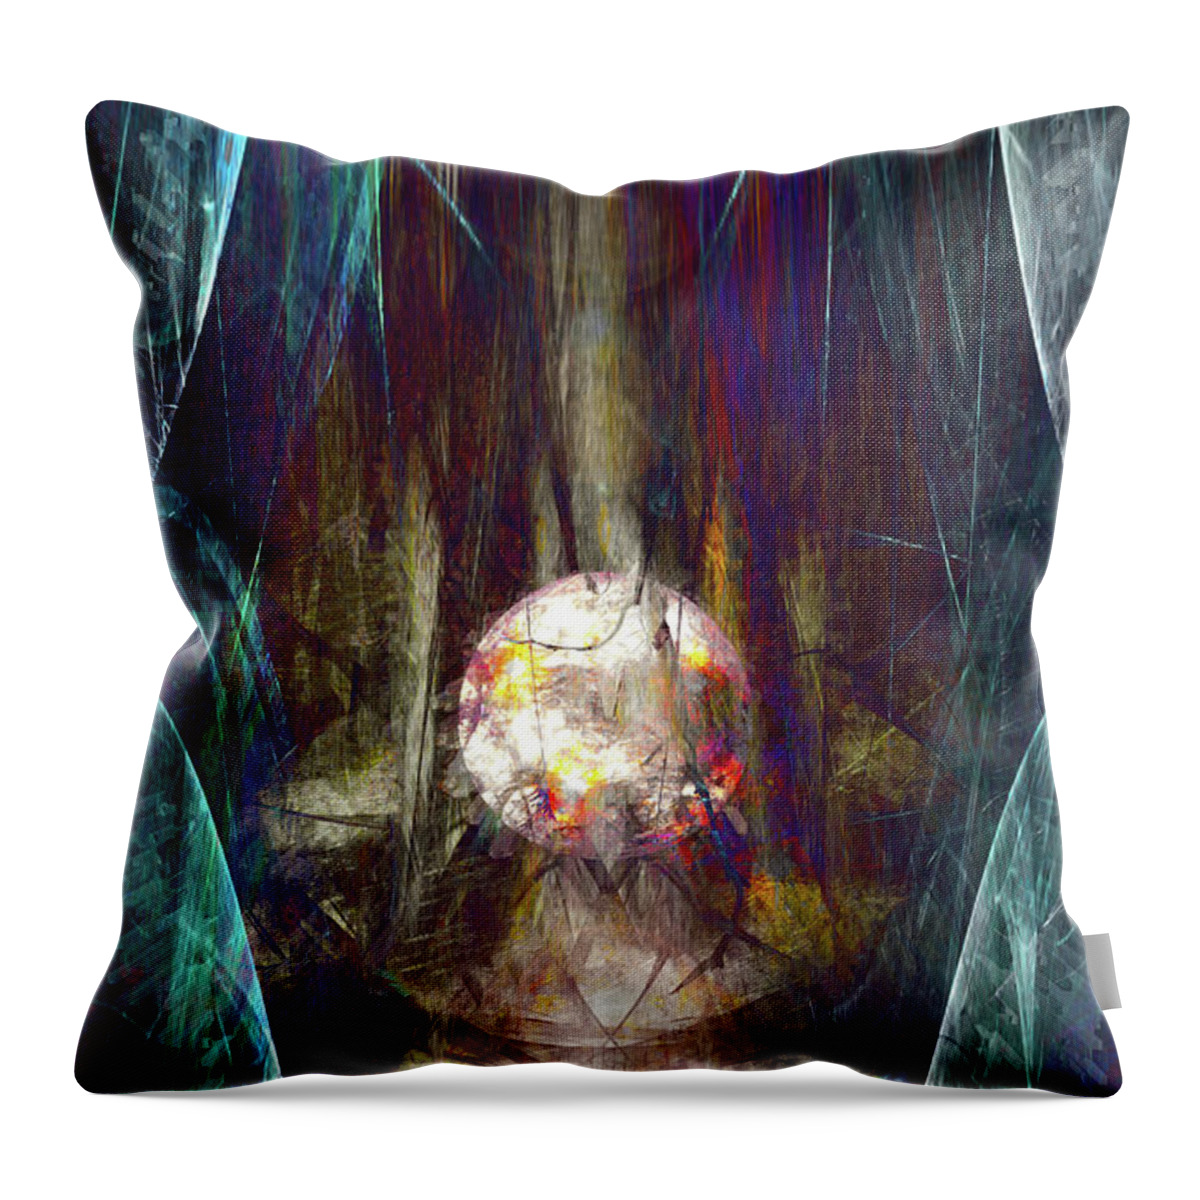 Crystal Ball Throw Pillow featuring the digital art Crystal Ball by Linda Sannuti